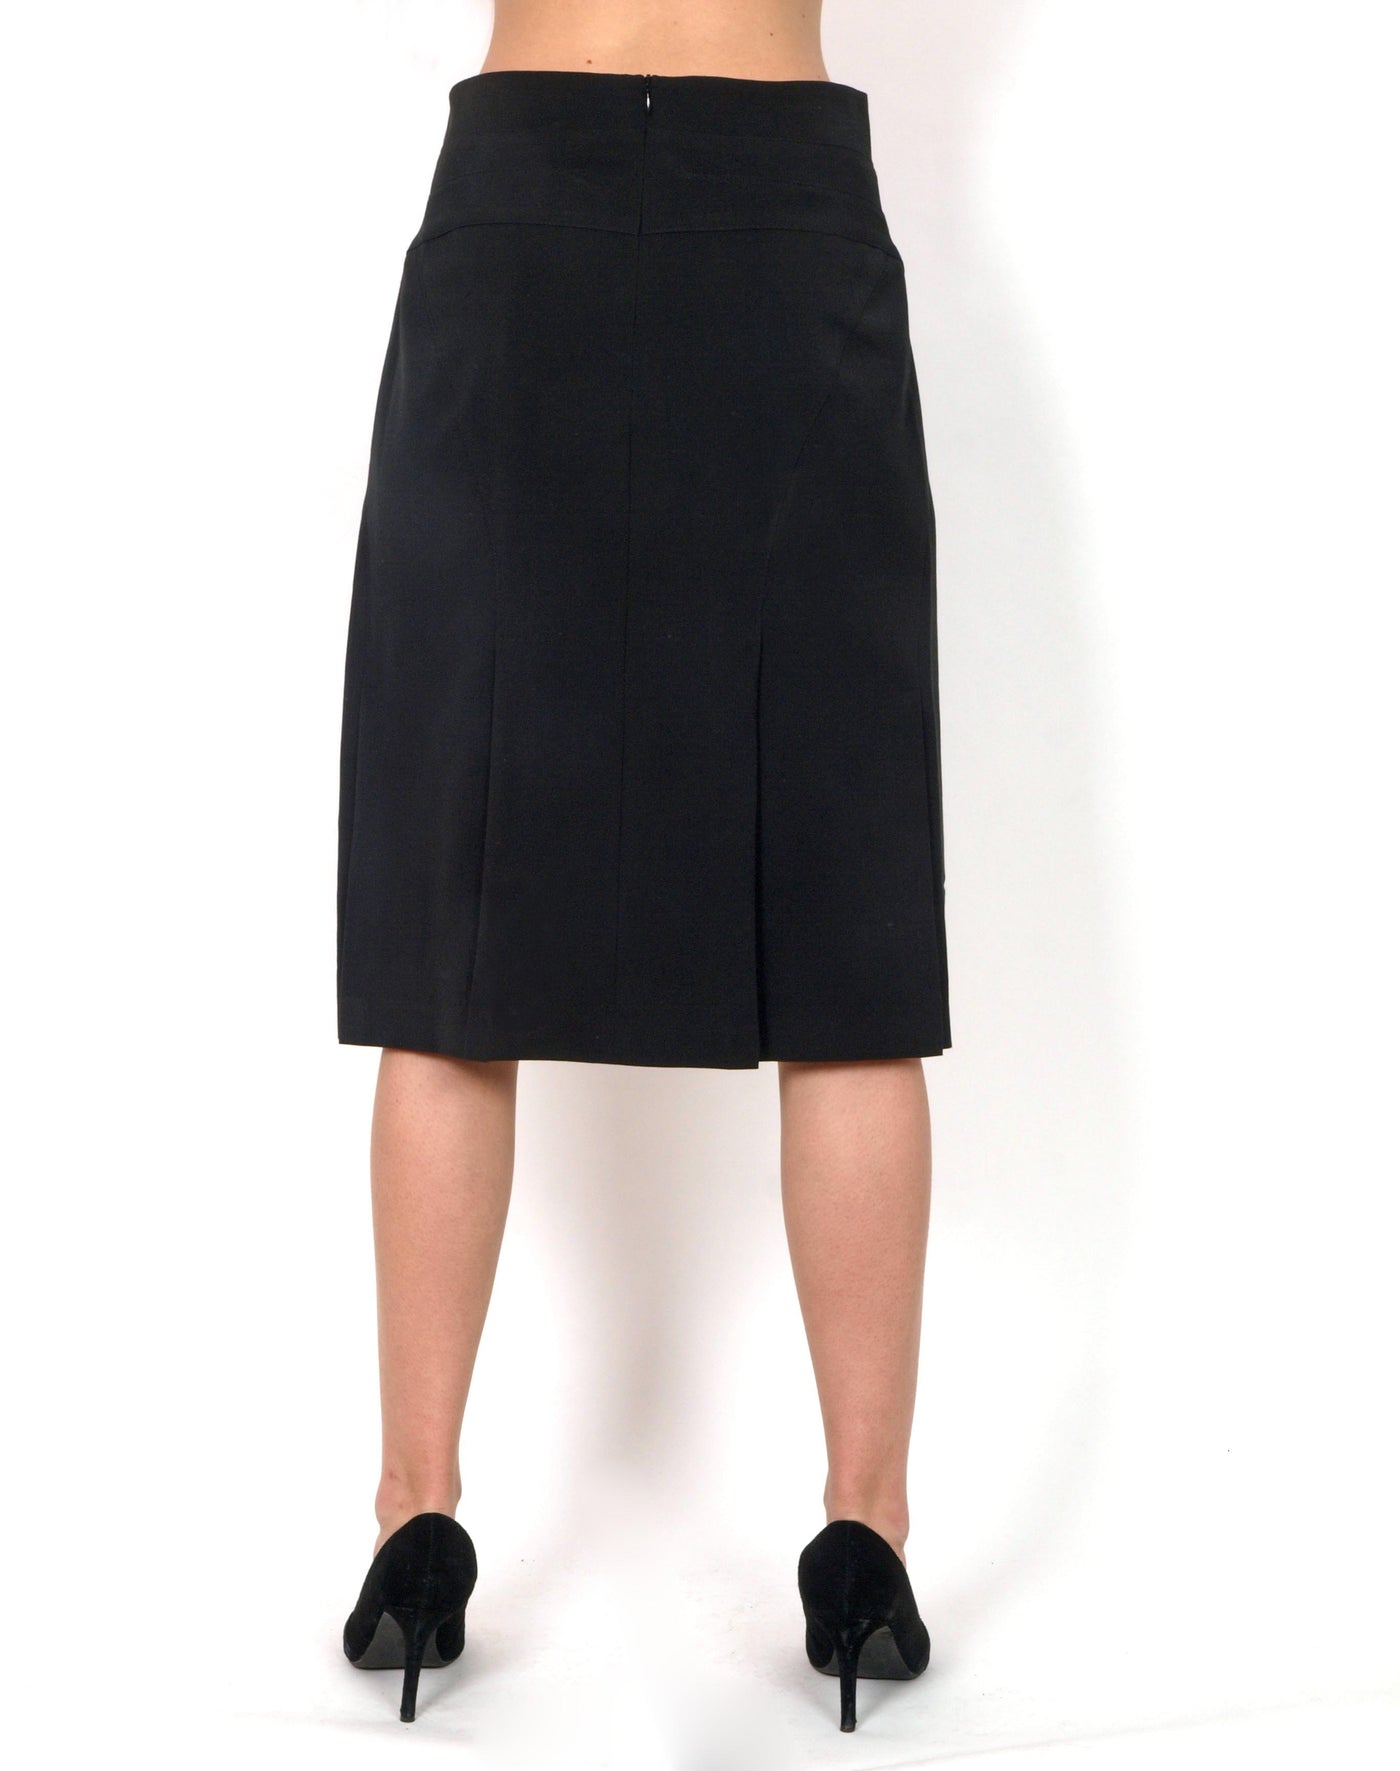 Straight cut black skirt